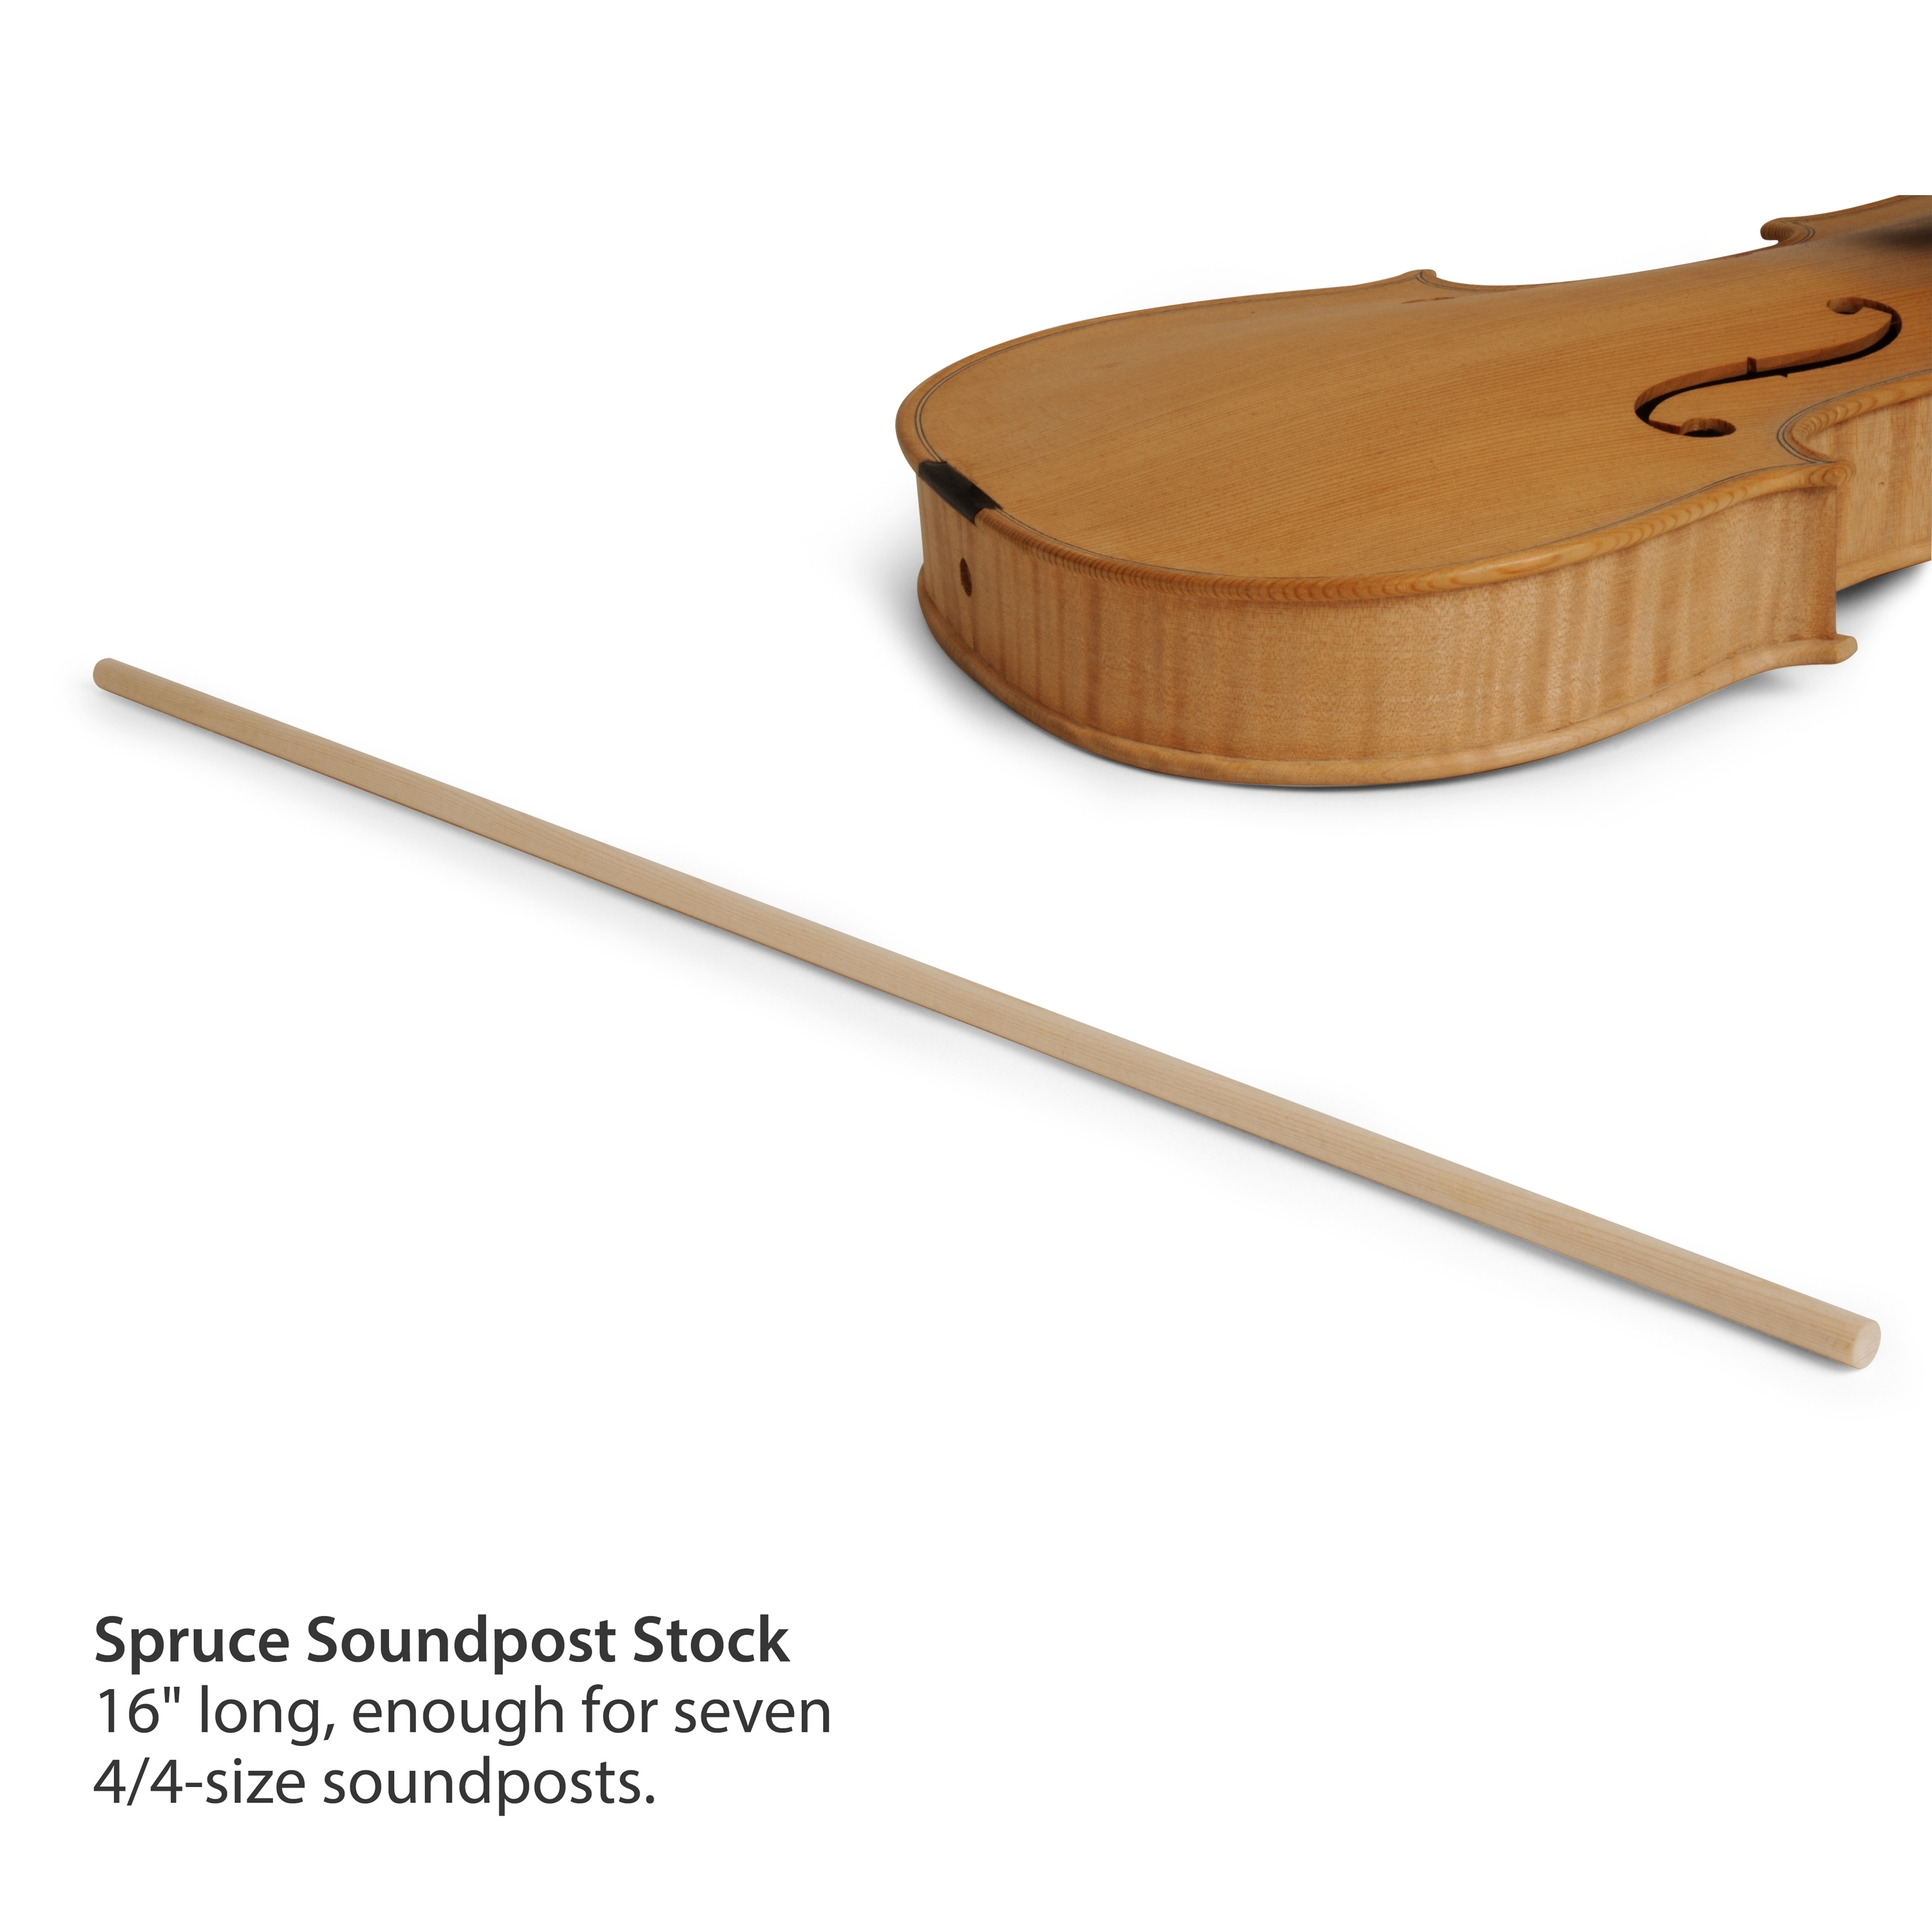 Spruce Soundpost Stock